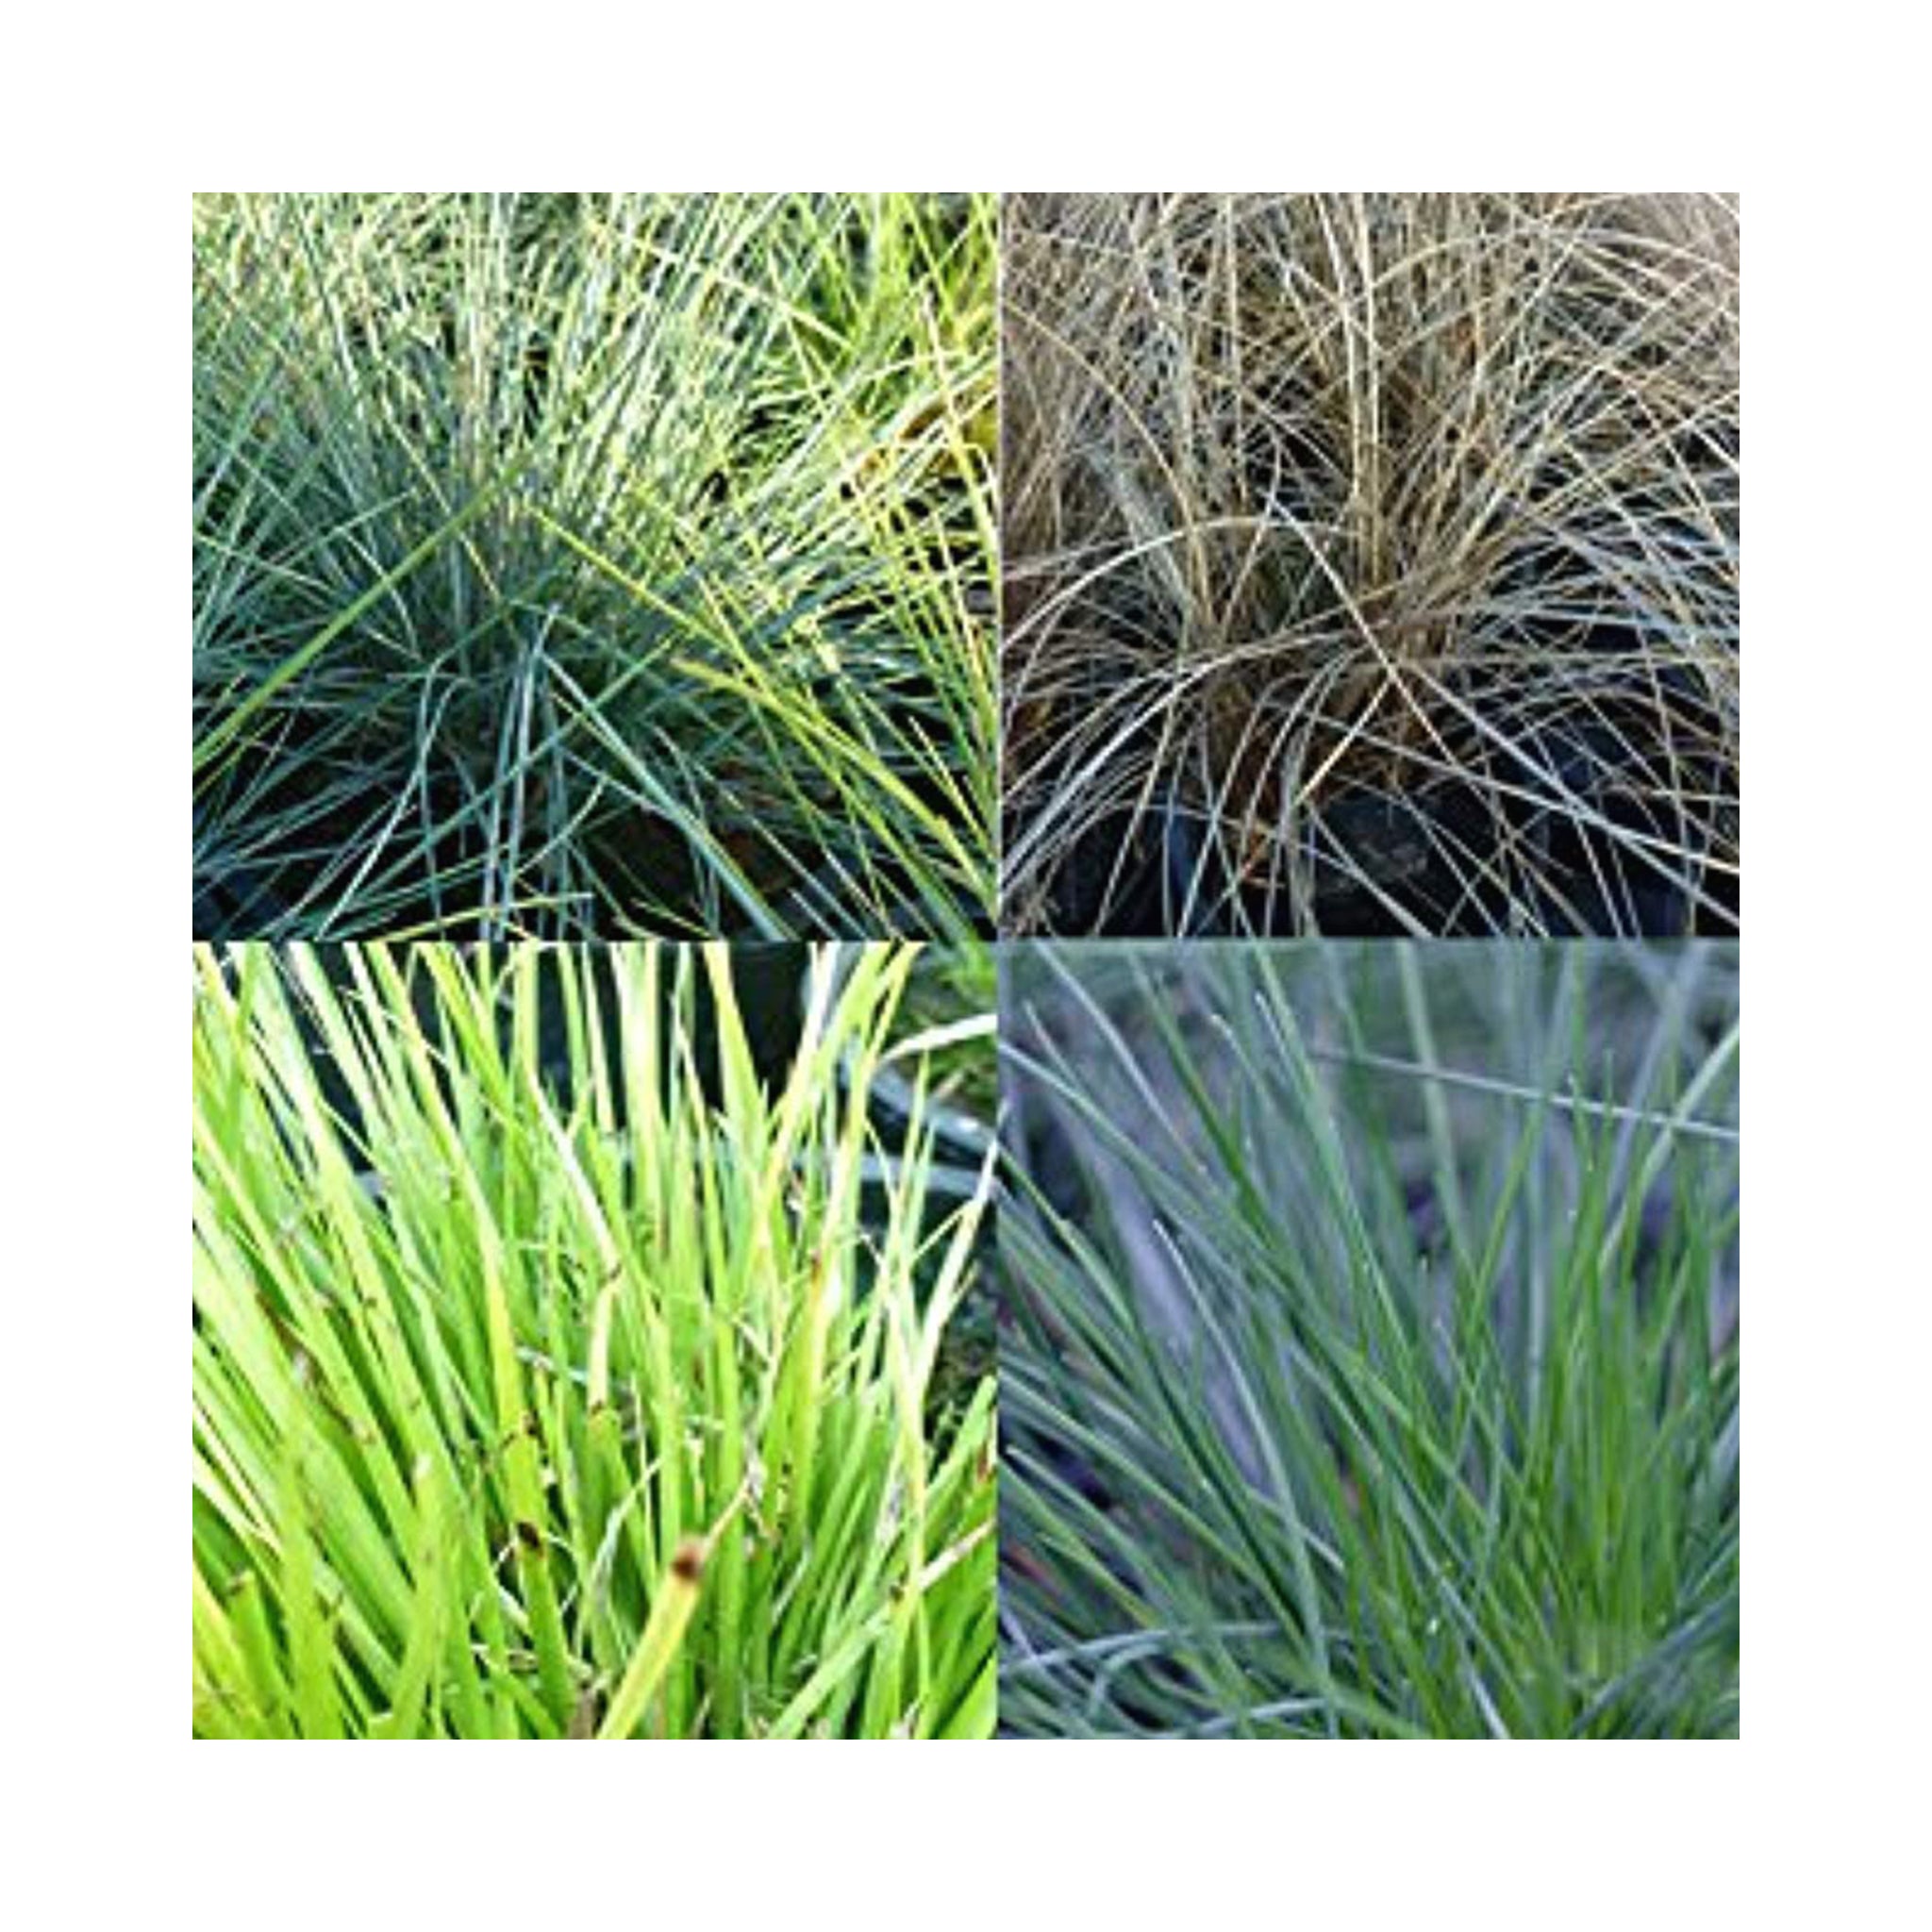 3 Mixed Evergreen Ornamental Grass 9cm Plants. Hardy Perennials